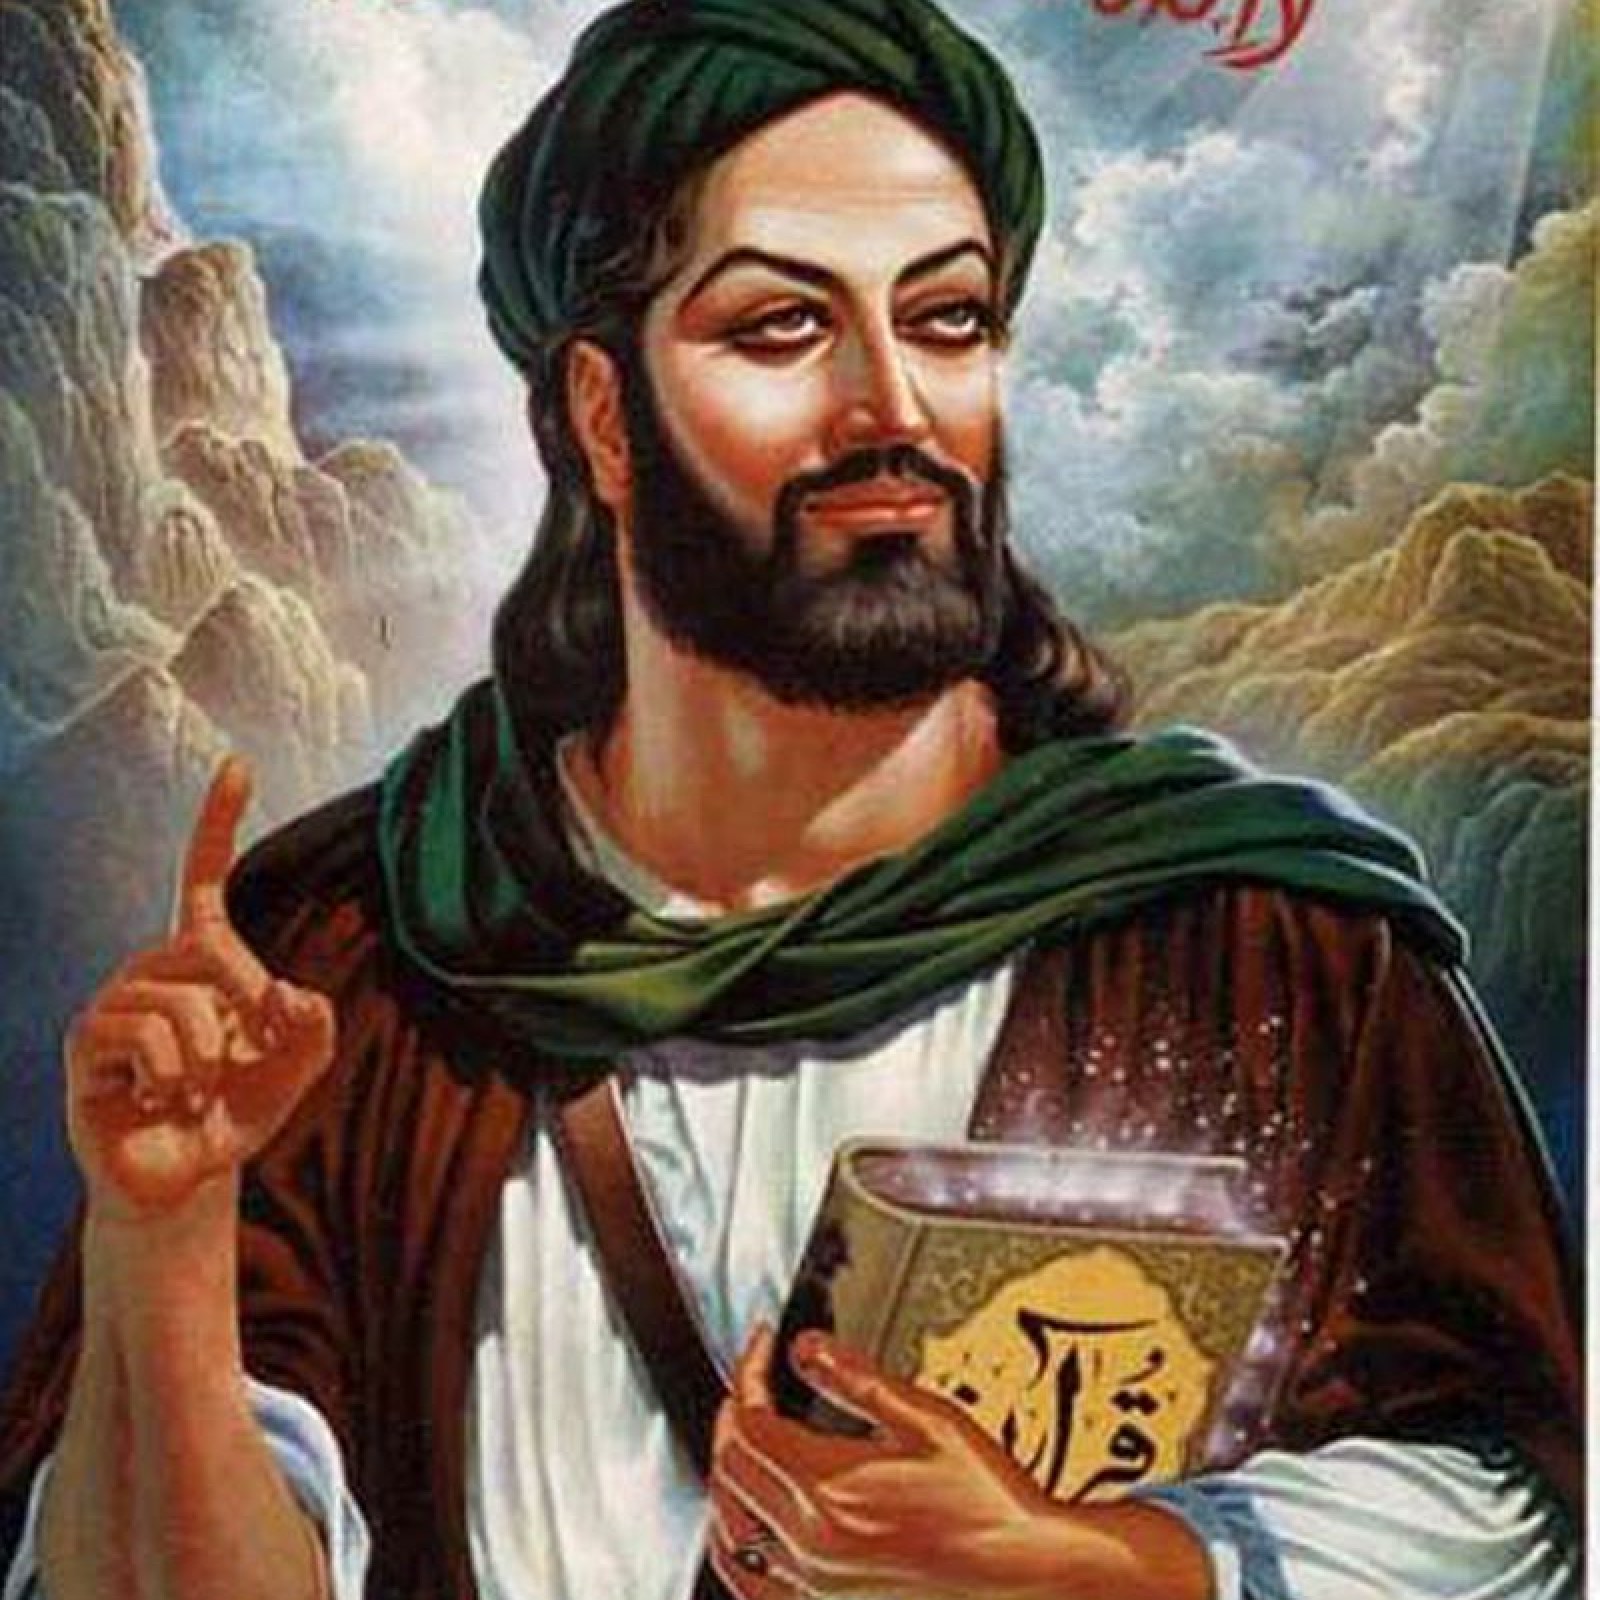 Мухаммад ф. Пророк Мухаммад основатель Ислама. Пророк Мухаммед 570. Пророк Мухаммед (570-632 гг.).